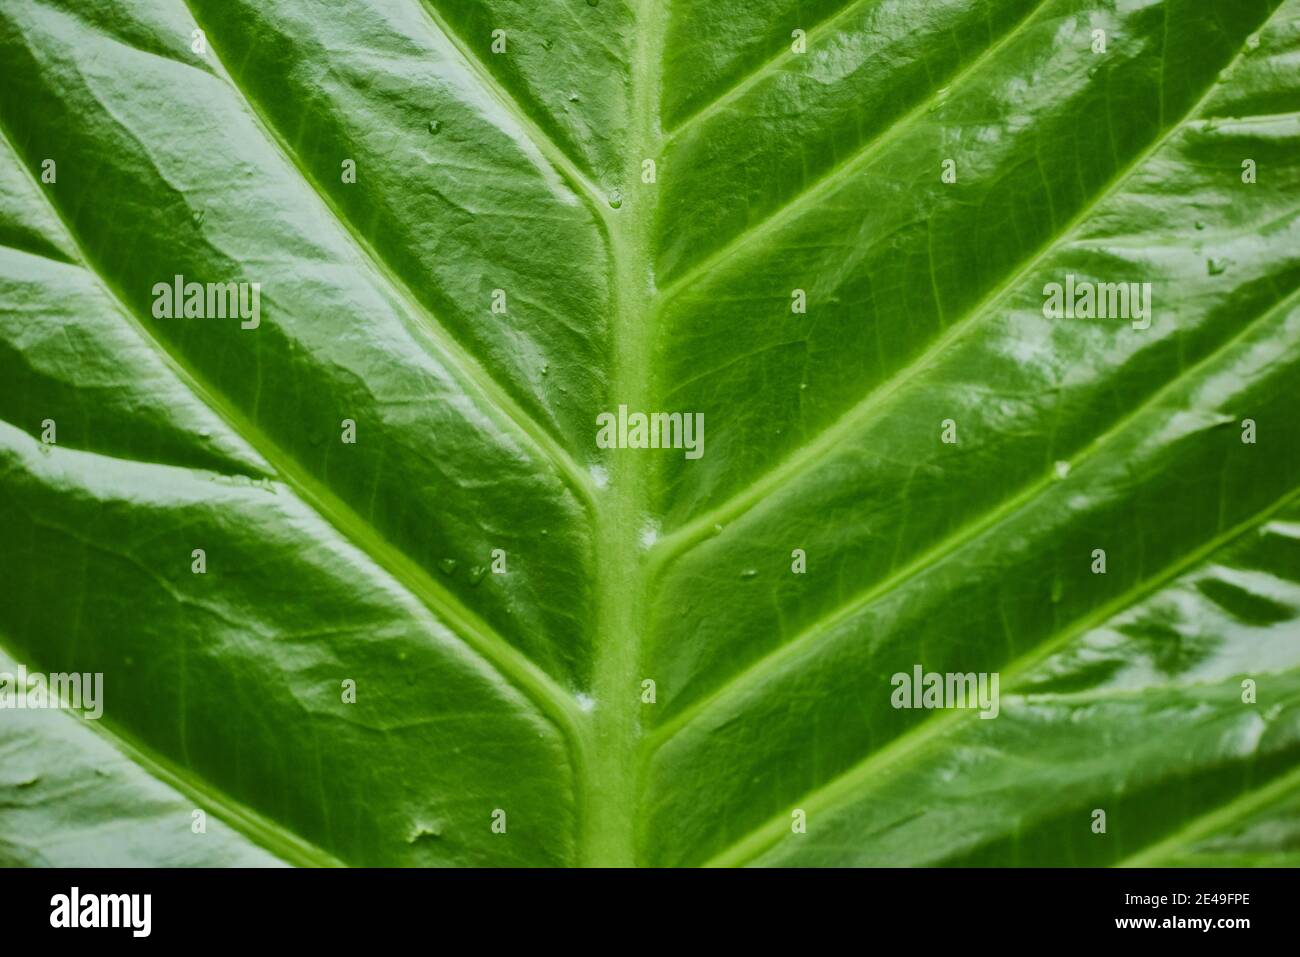 Leaf of the Elephant's Ear or Giant-Leaved Arrow Leaf (Alosasia macrorrhizos), detail, Germany Stock Photo